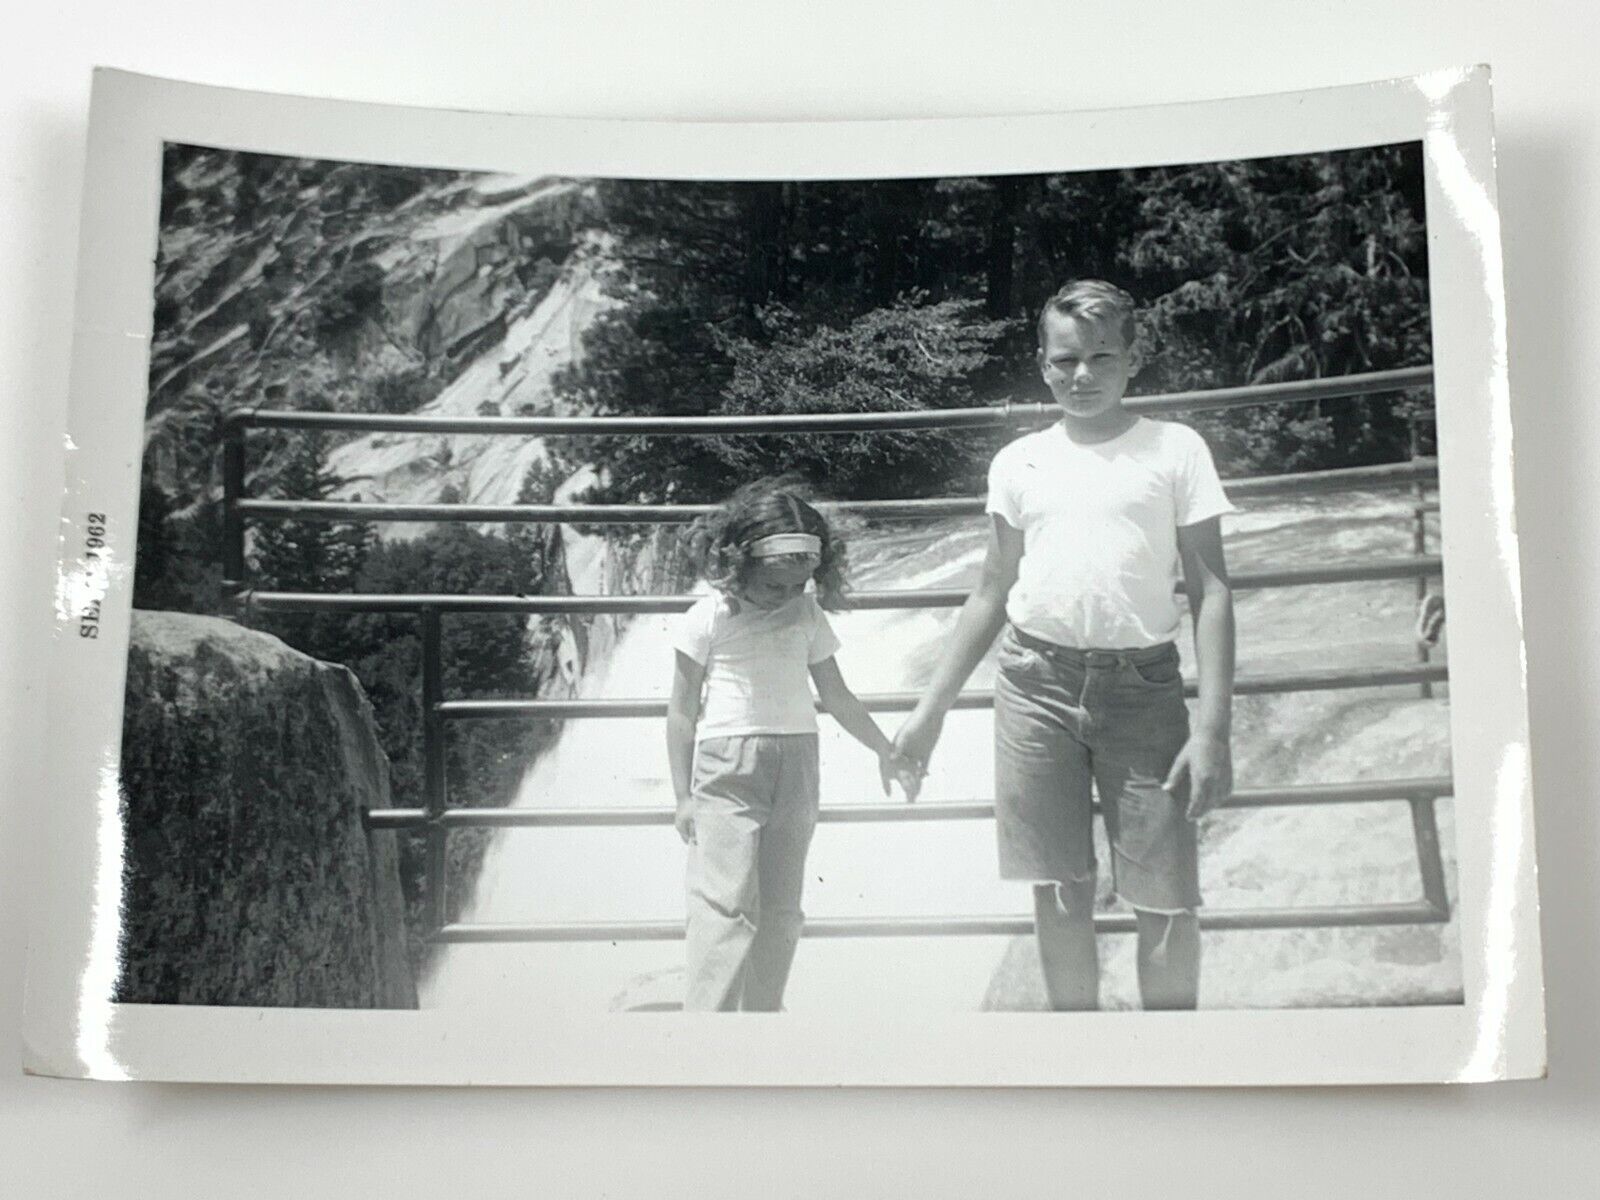 AfC) Found Photo Photograph Snapshot Vintage Boy & Girl Siblings Waterfall